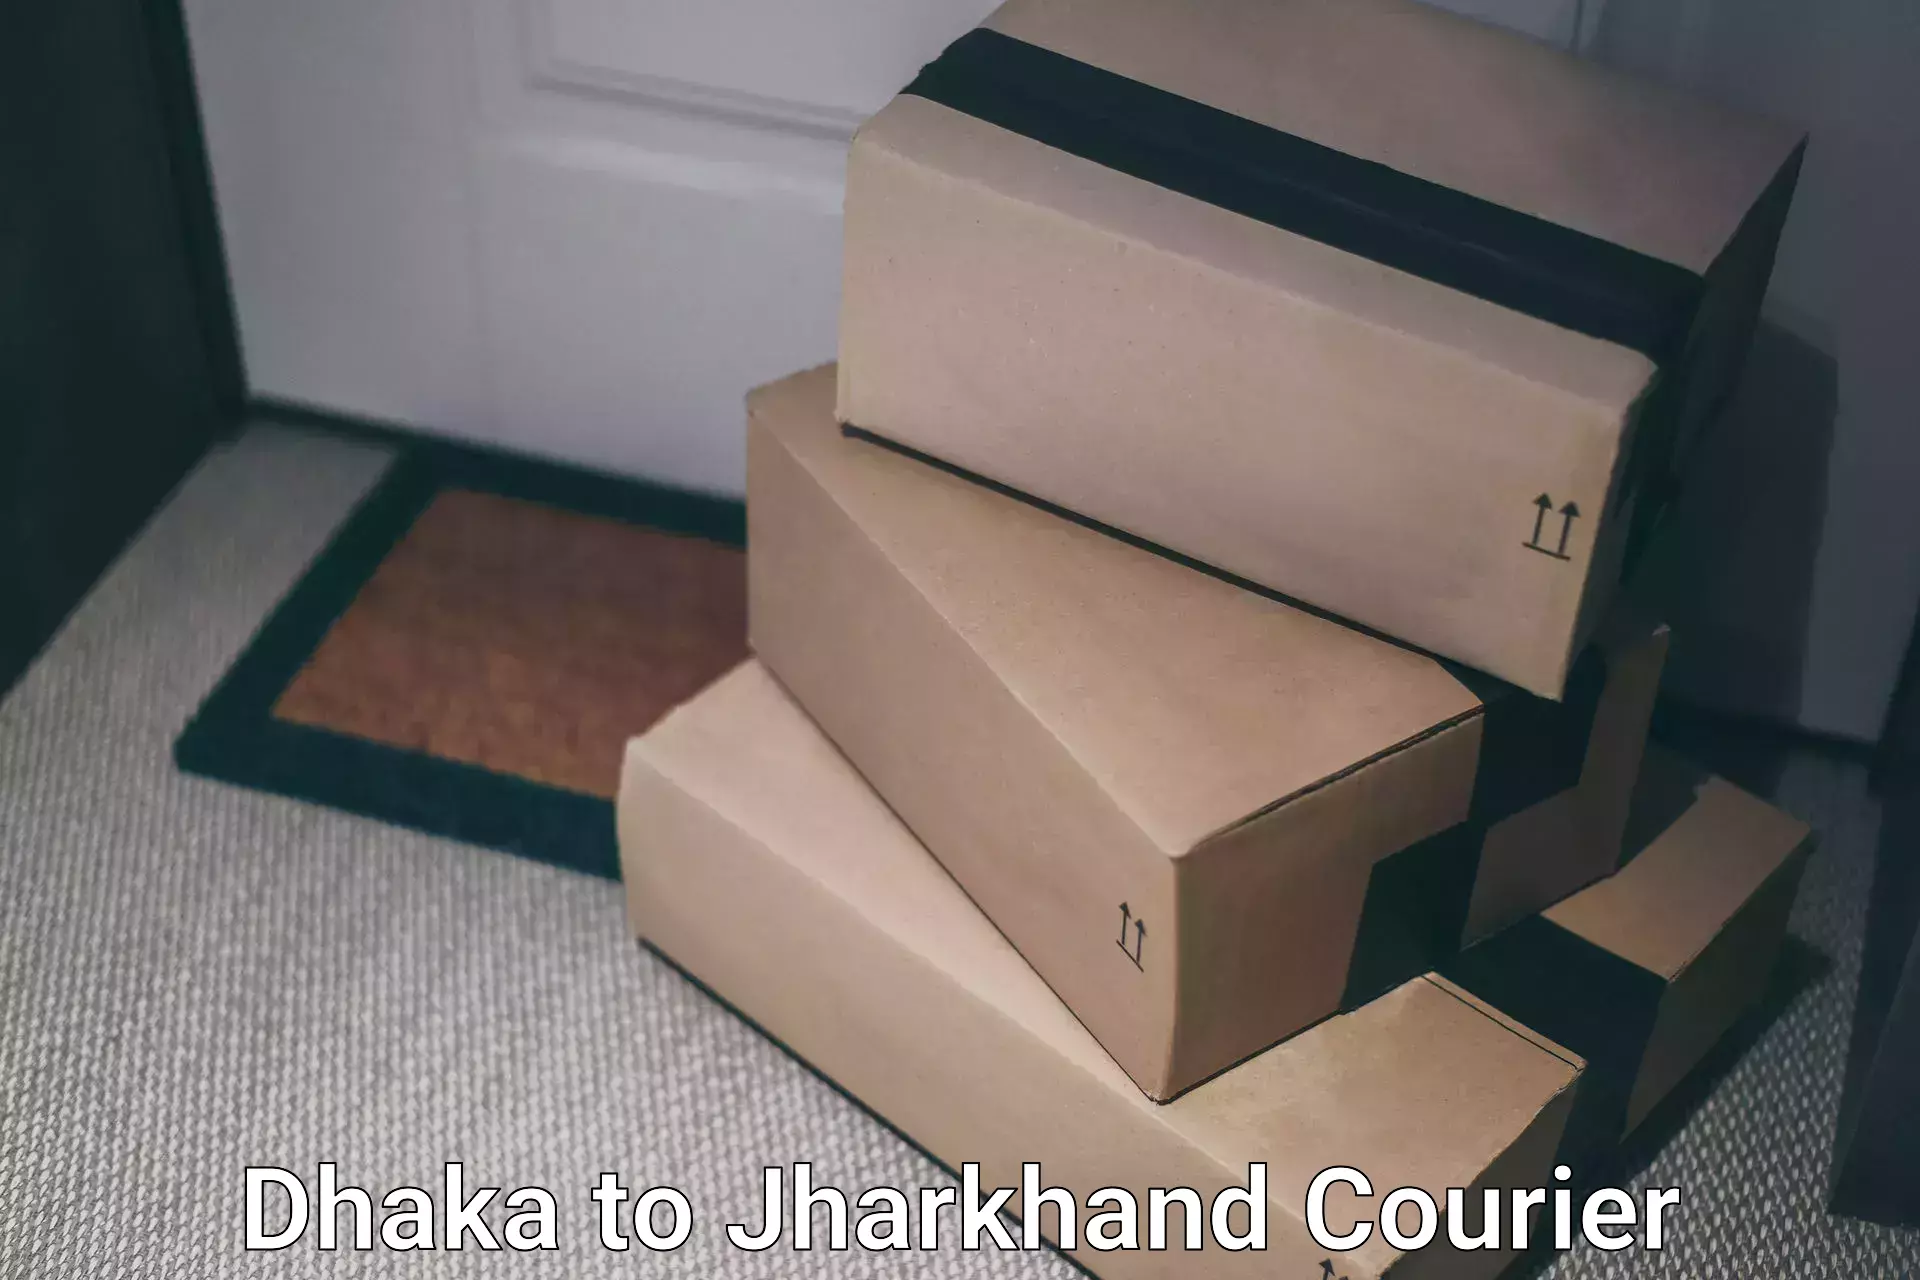 Global logistics network Dhaka to Jharkhand